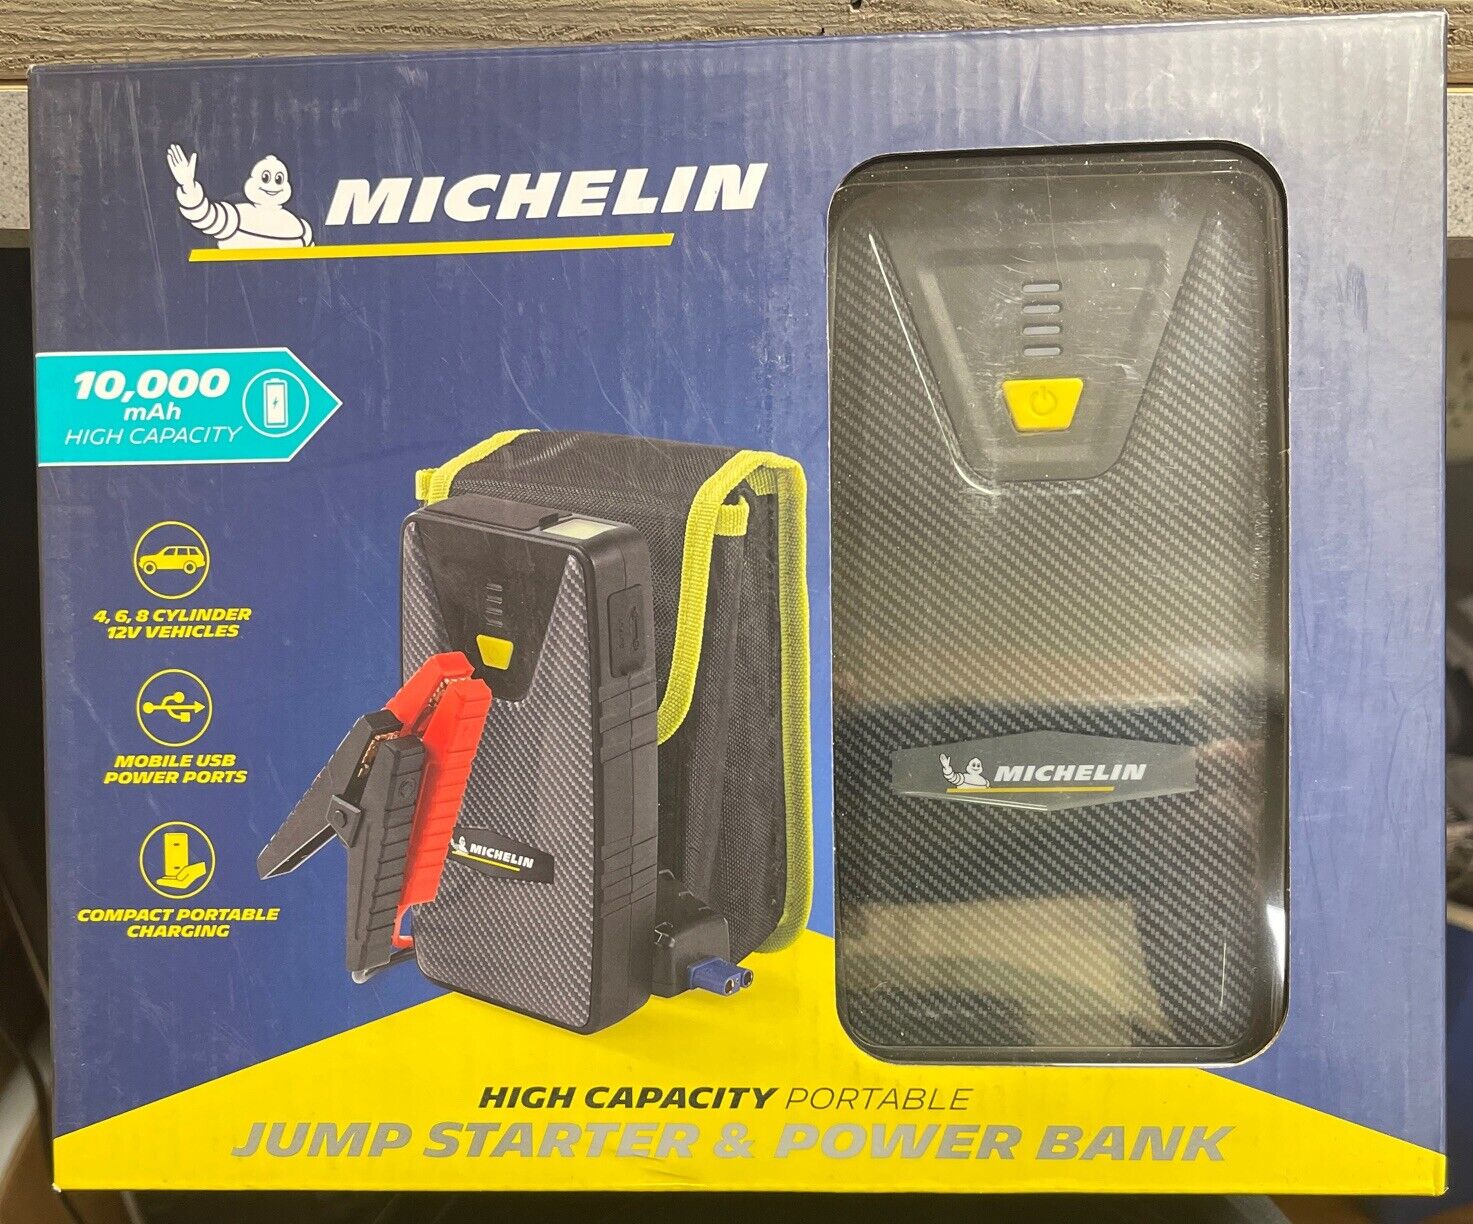 Michelin High Capacity Portable Jump Starter and Power Bank Open Box